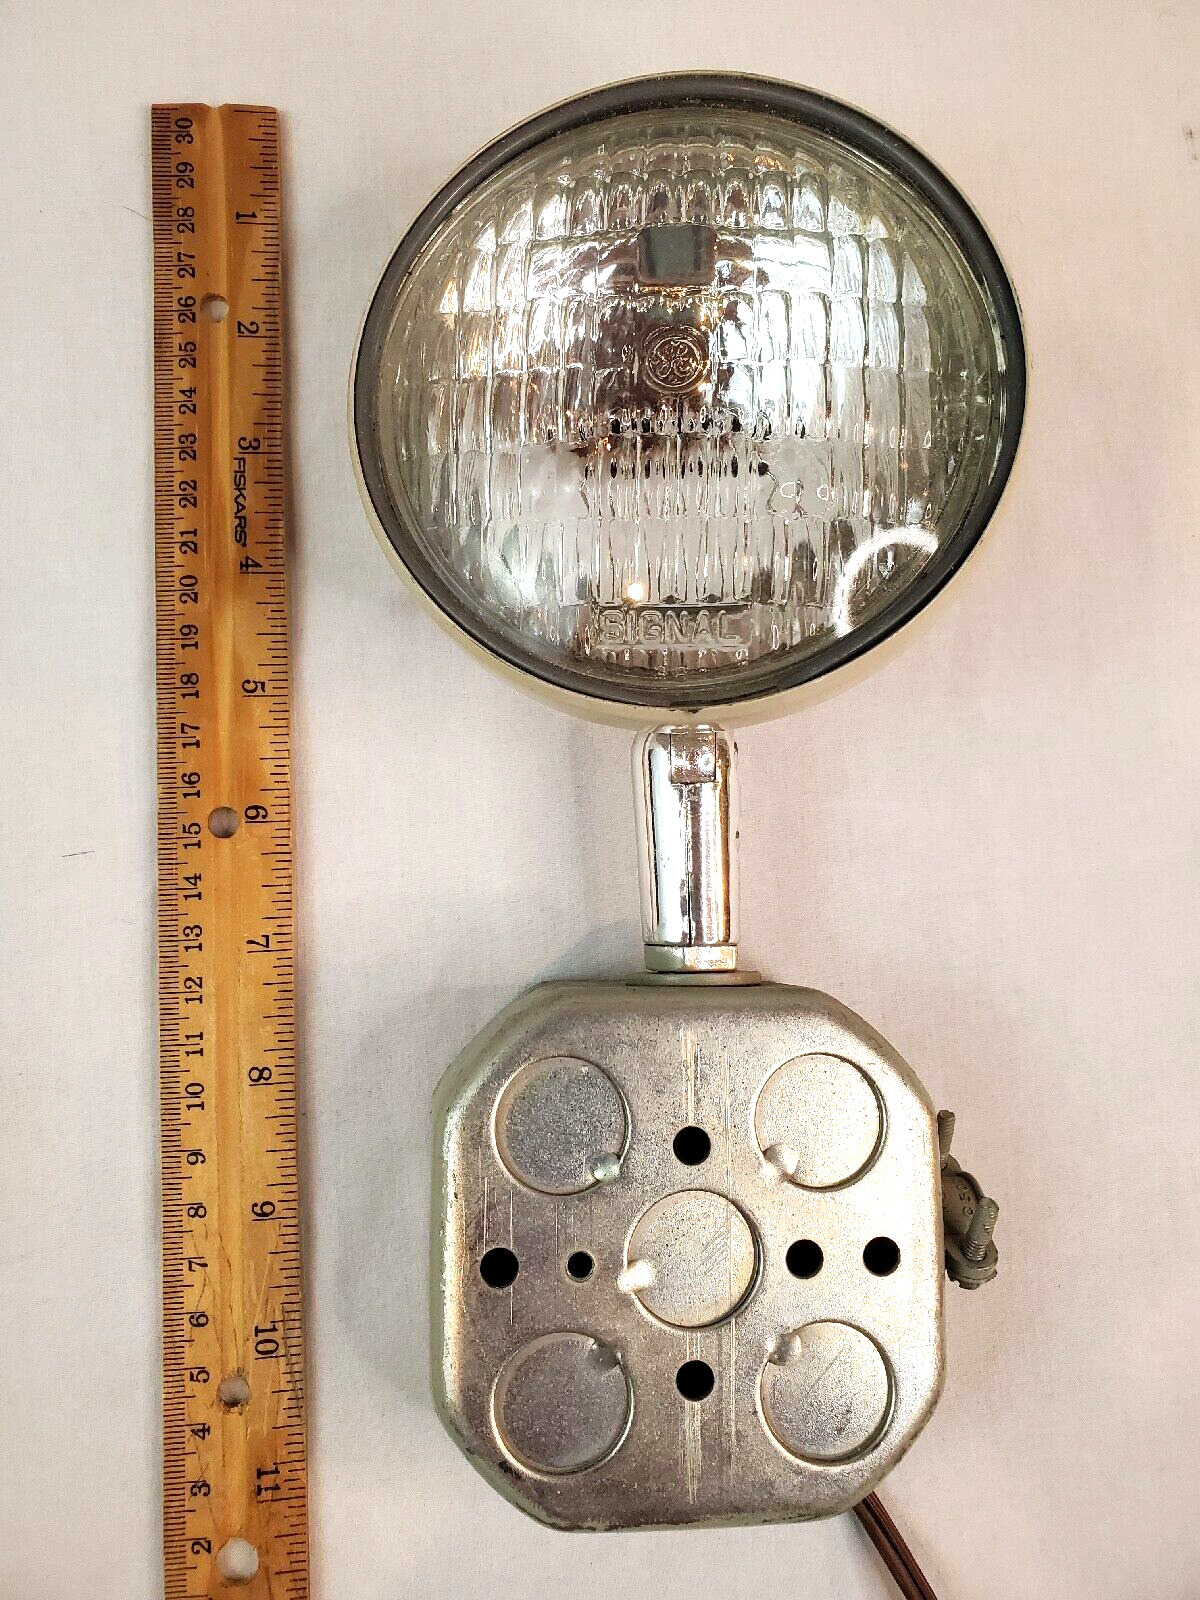 GE SIGNAL lamp light wired lighting fixture headlamp headlight beam case vintage